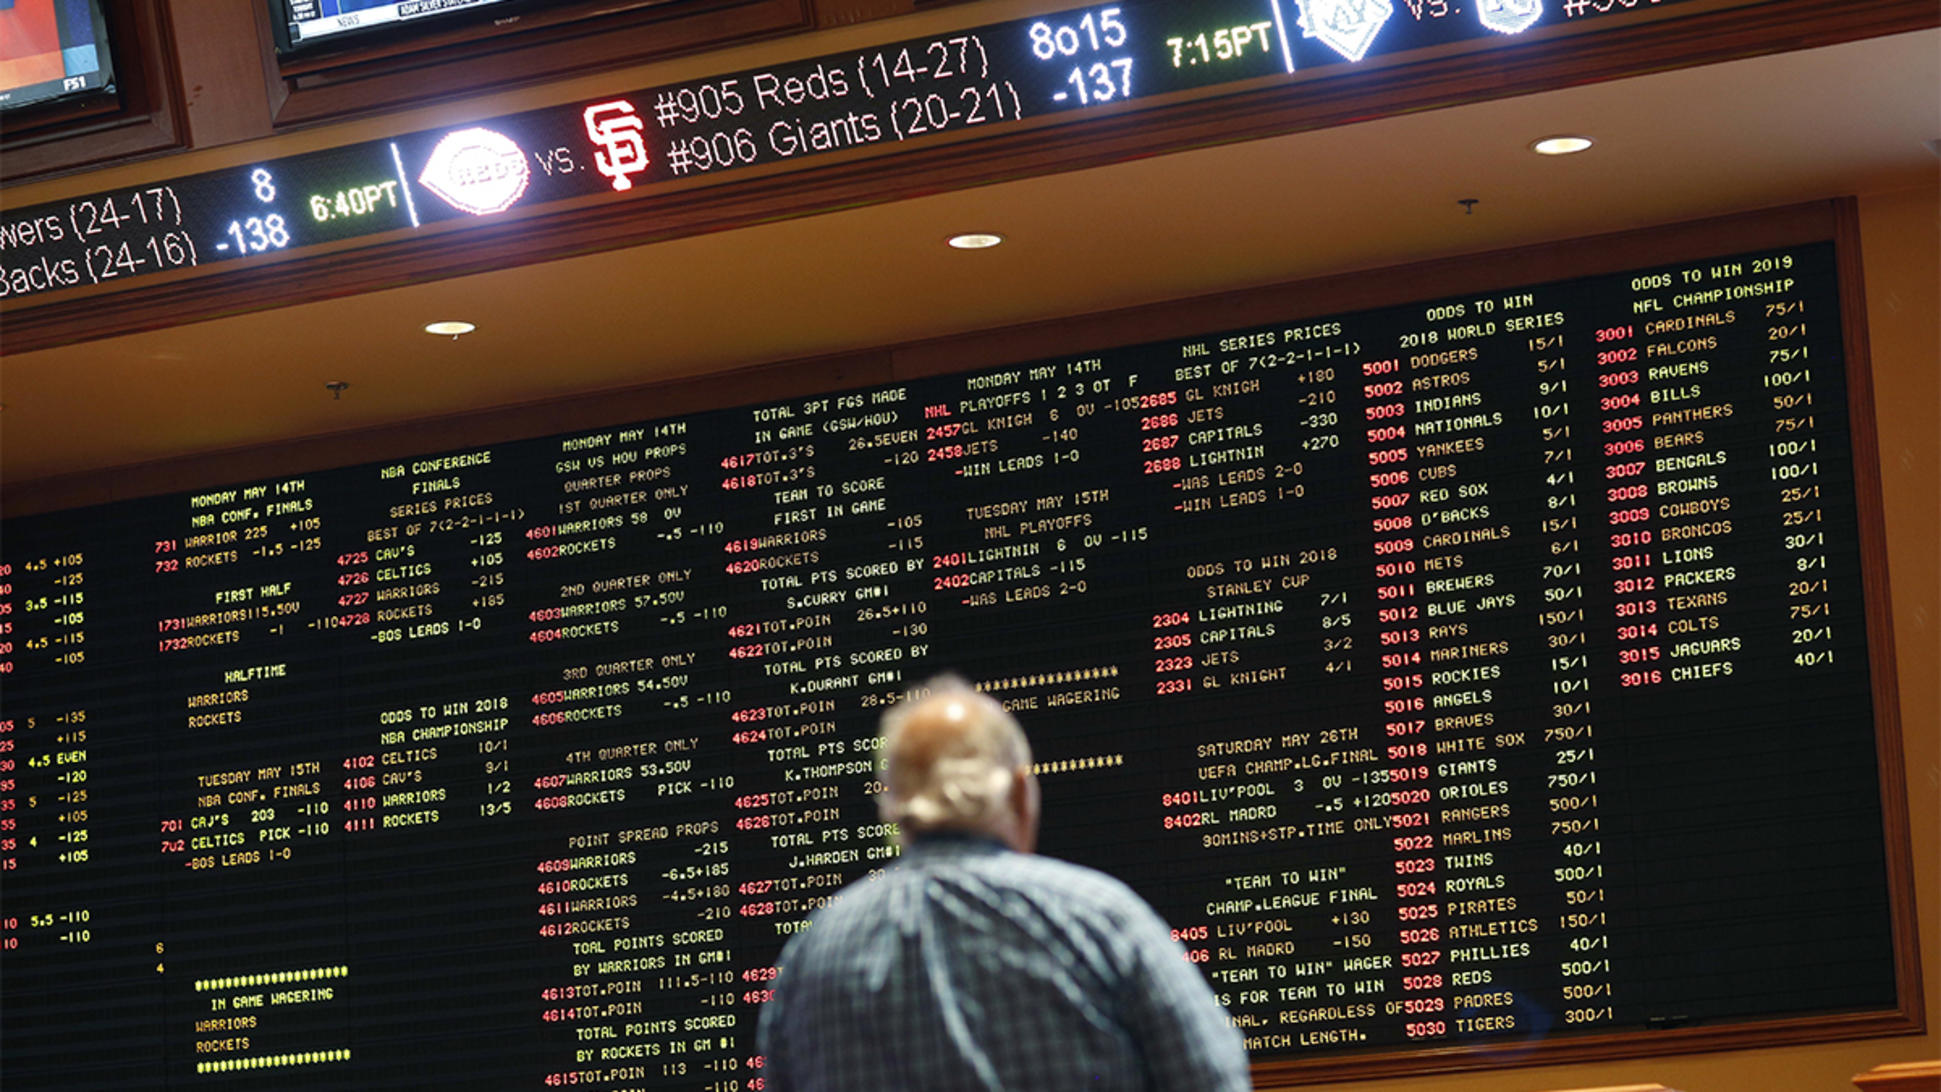 Delaware Will Offer Full Range of Sports Betting Options Starting Tuesday